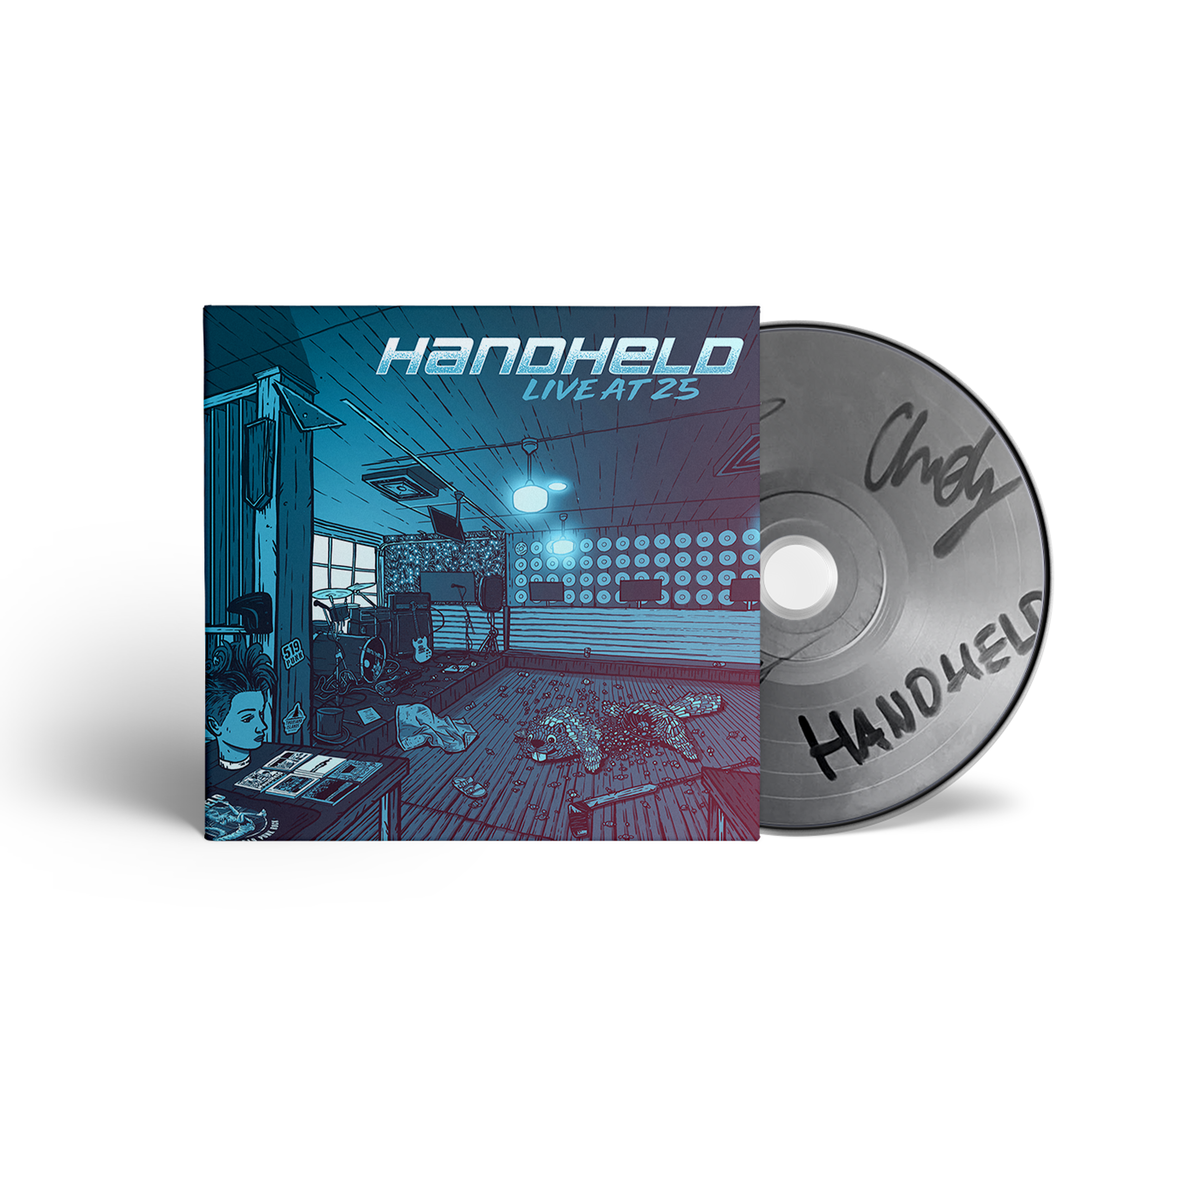 Handheld-LiveAt25-Mockup CD